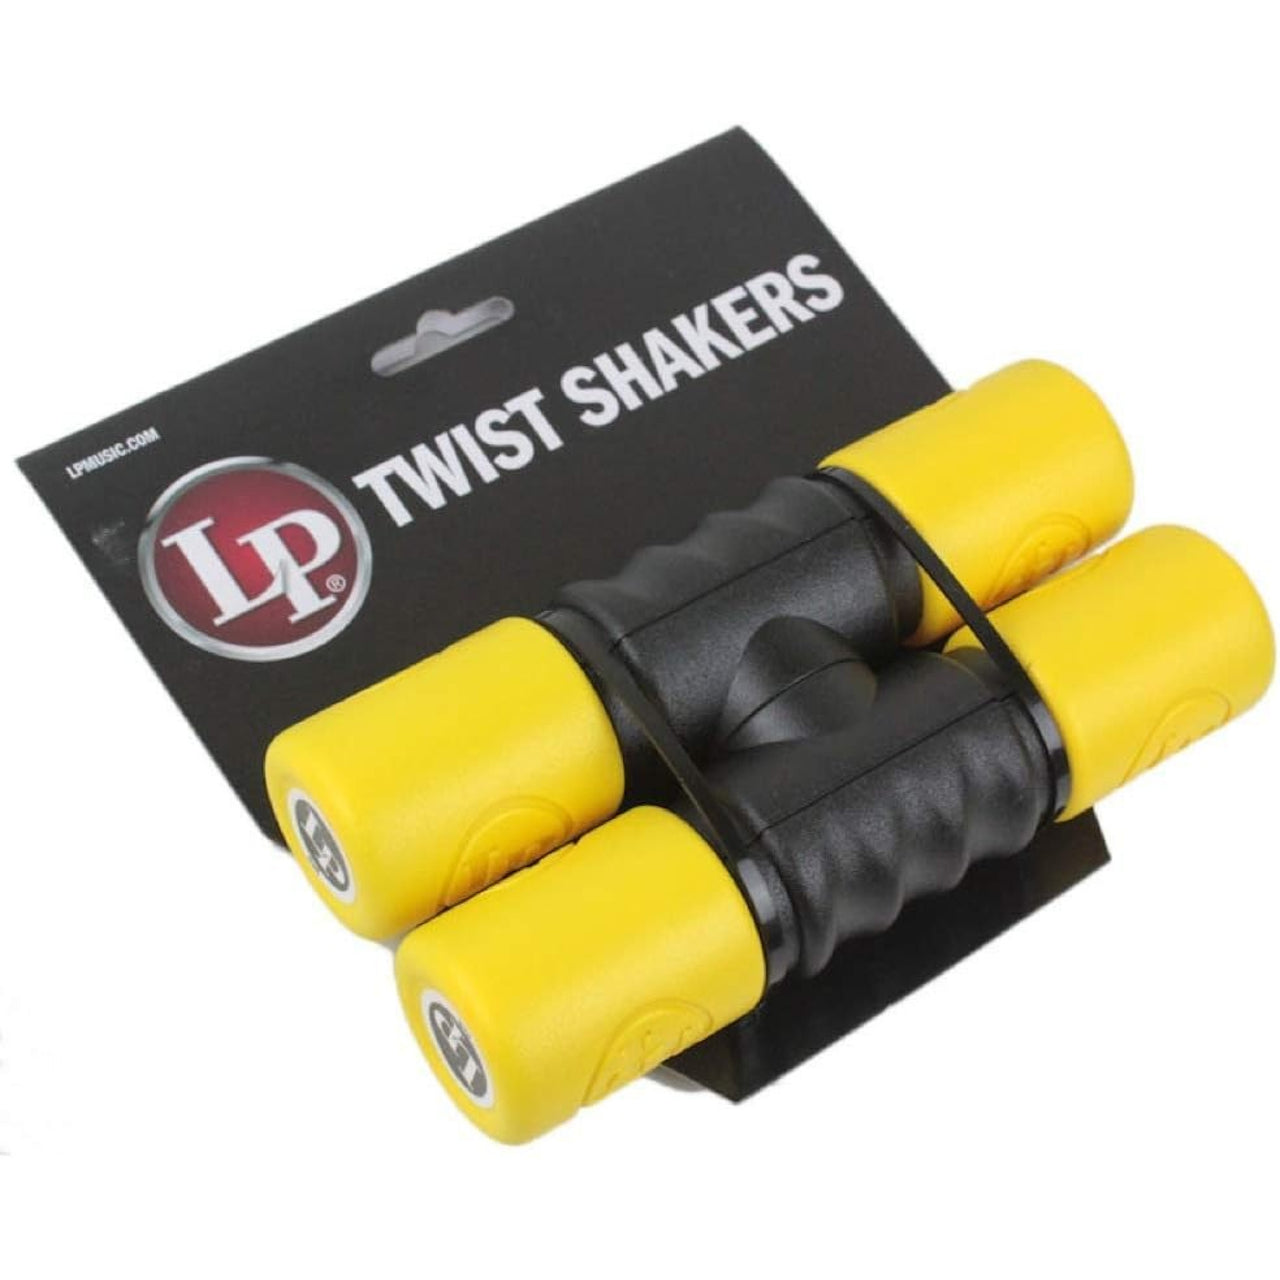 Shakers Lp Lp441t-s Twist Shaker Soft